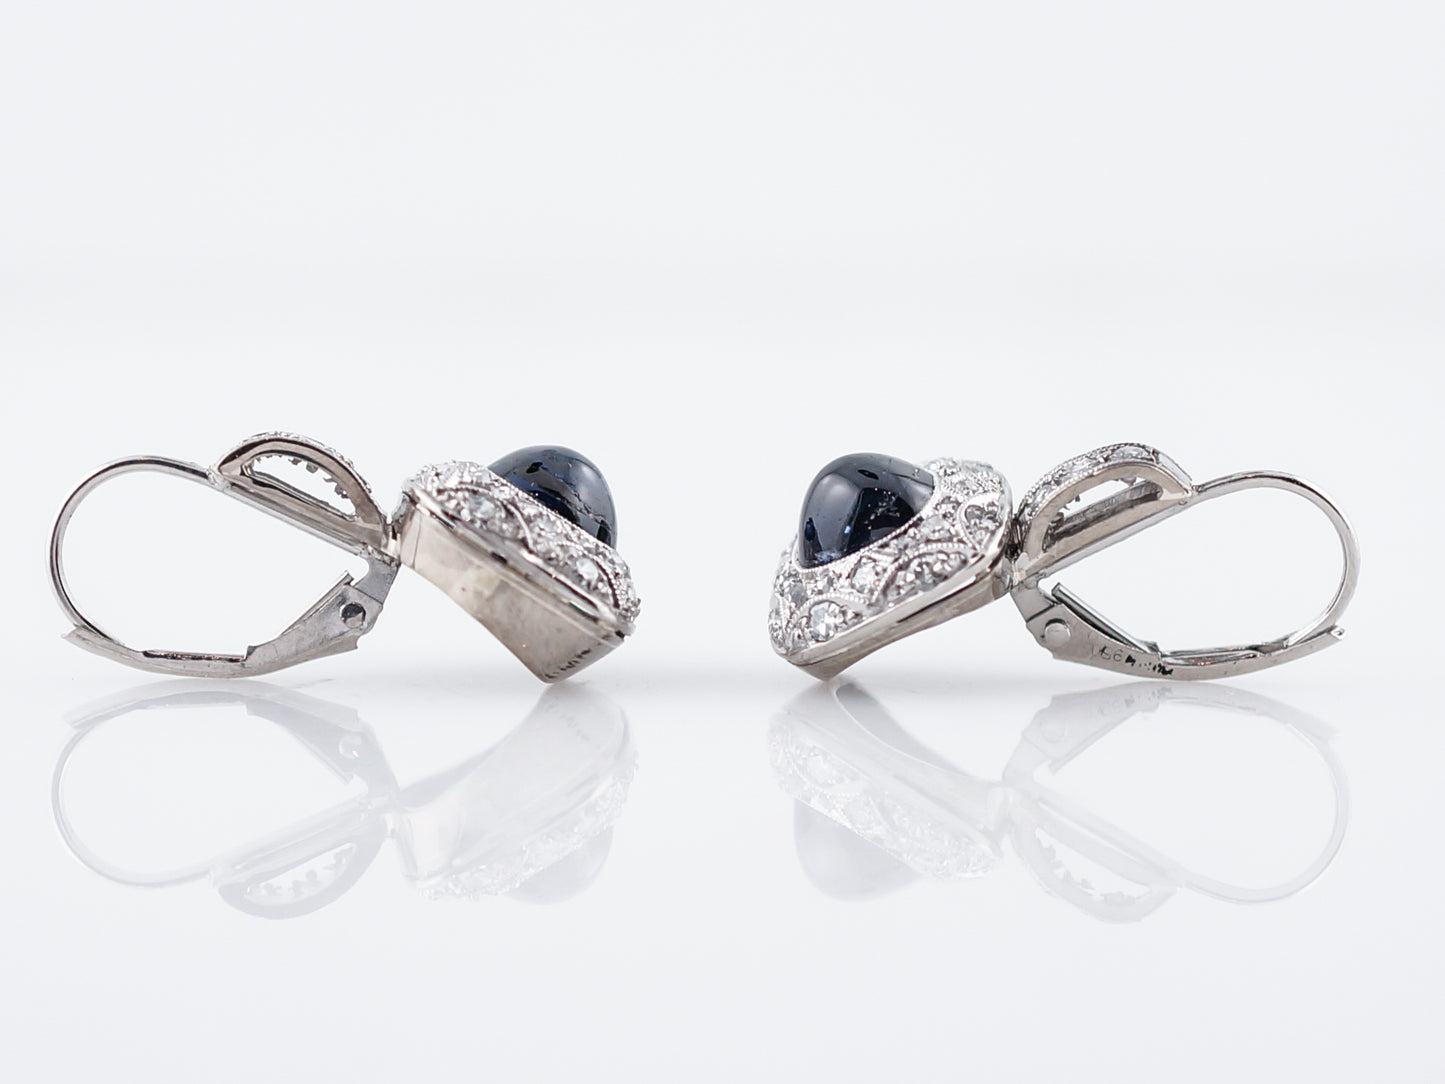 Antique Earrings Art Deco 12.12 Cabochon Cut Sapphires in Platinum